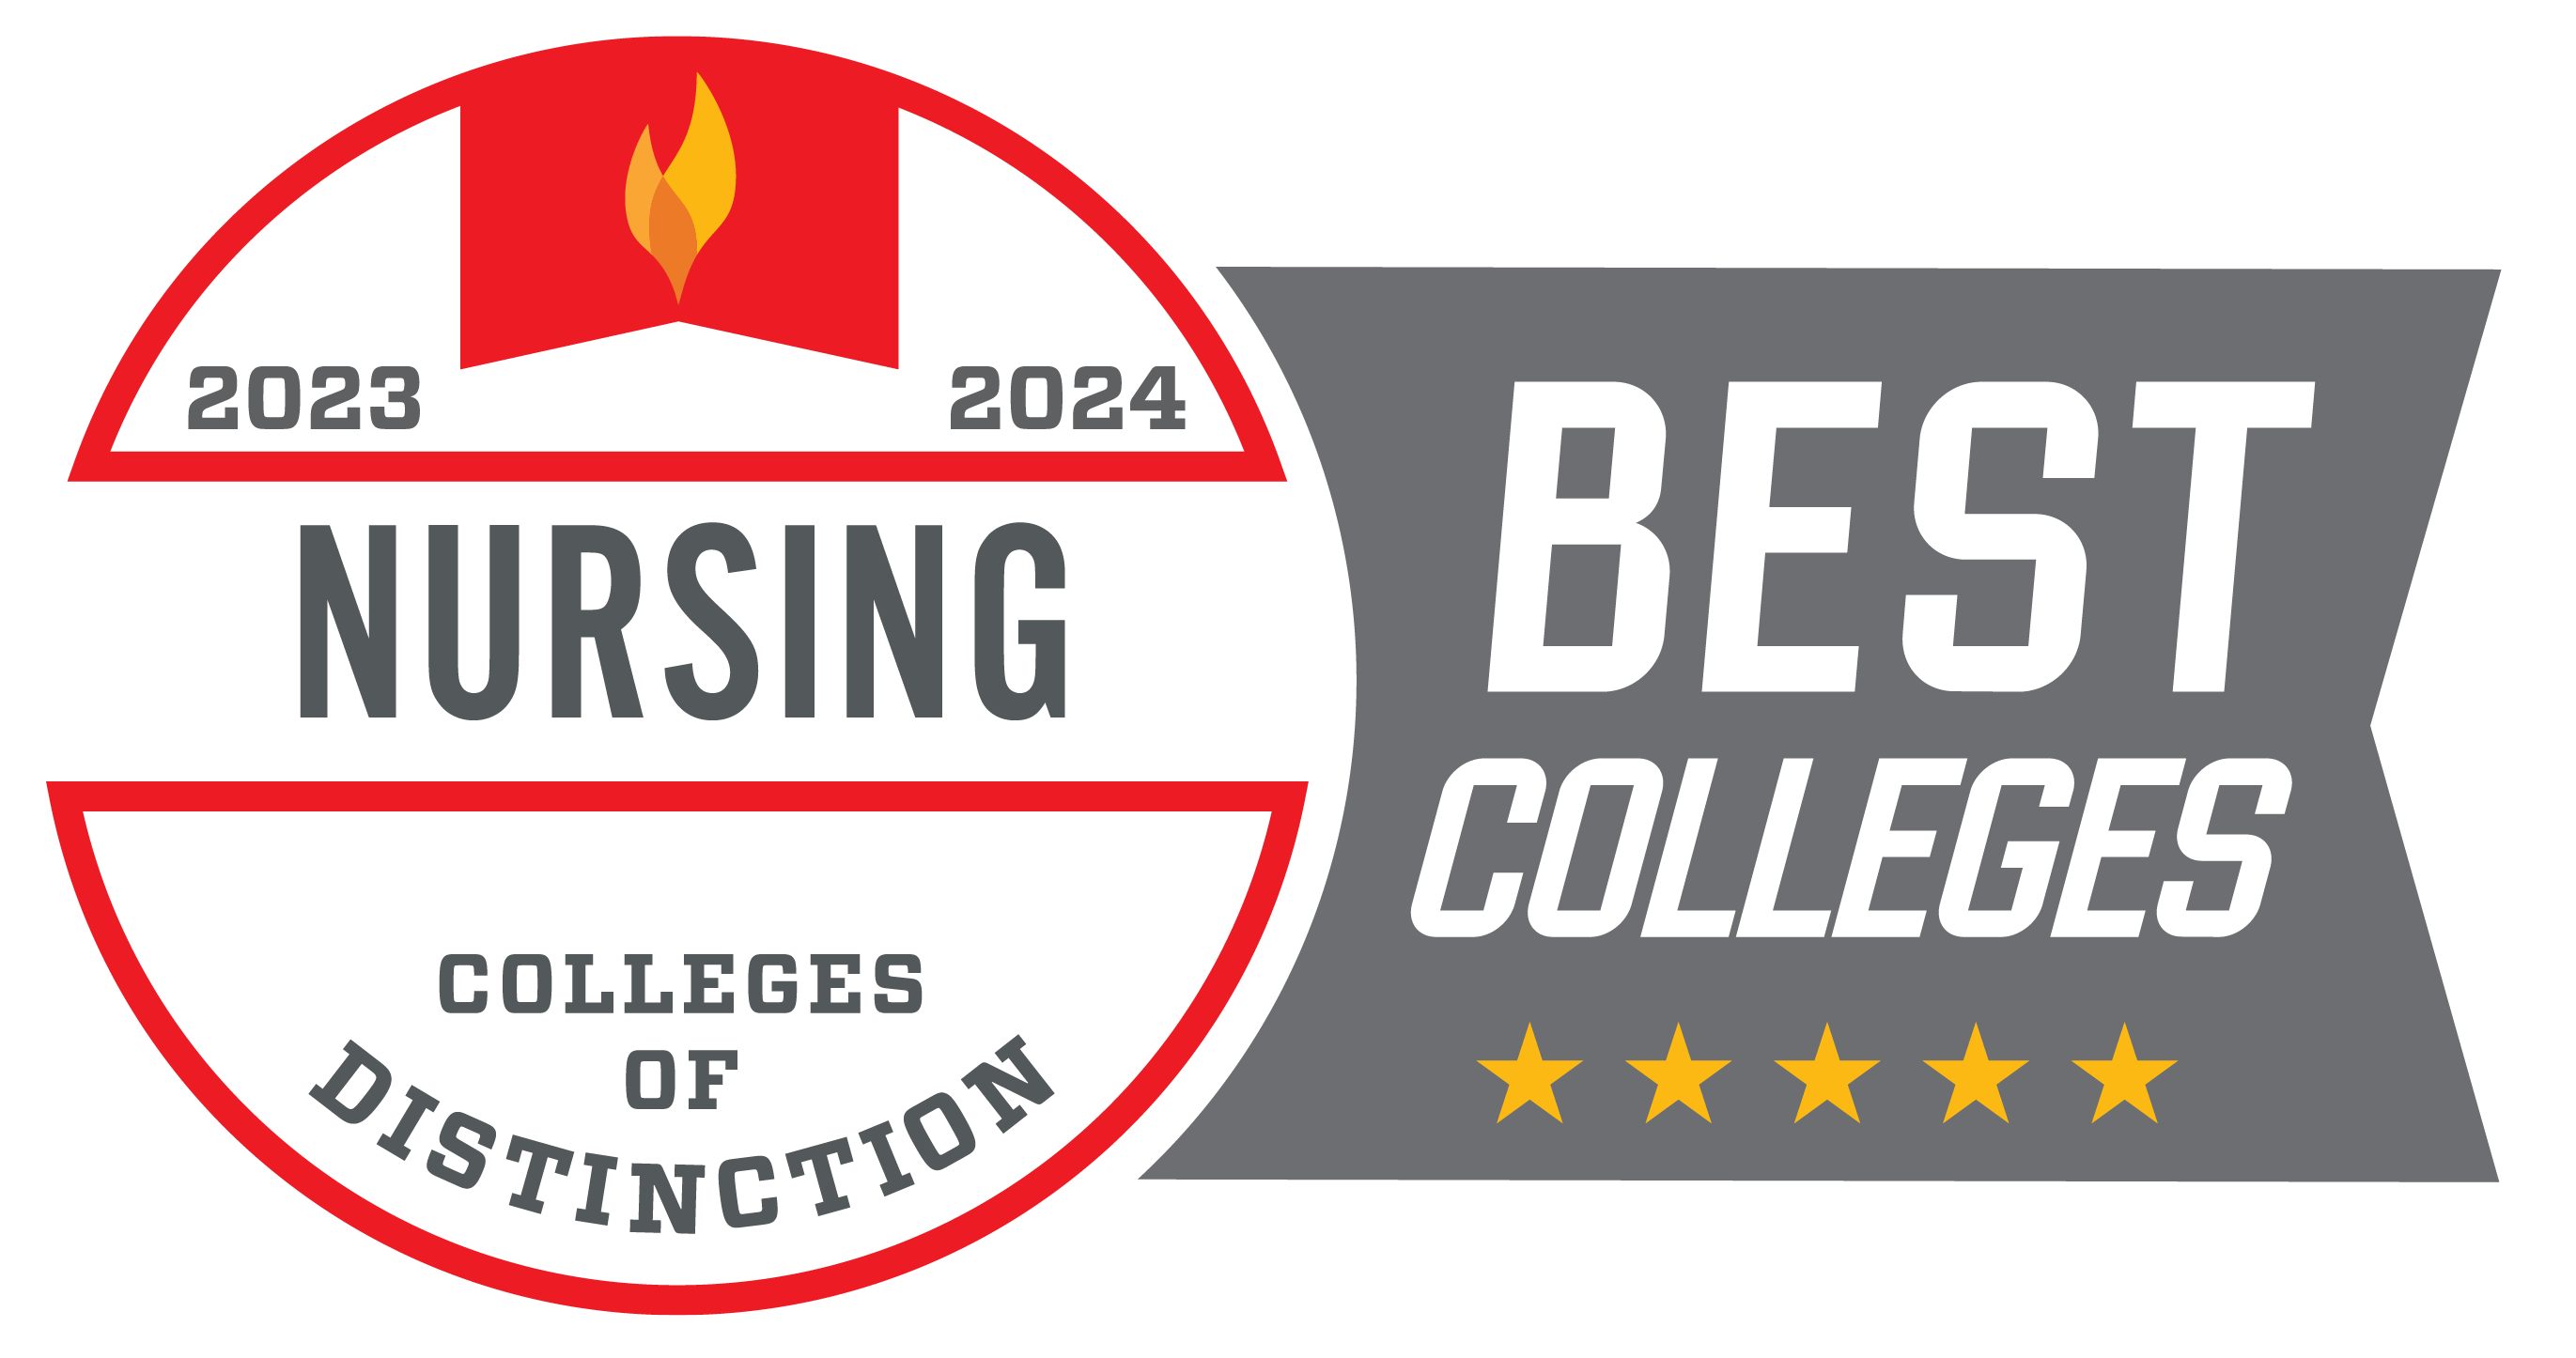 College of Distinction: Nursing badge